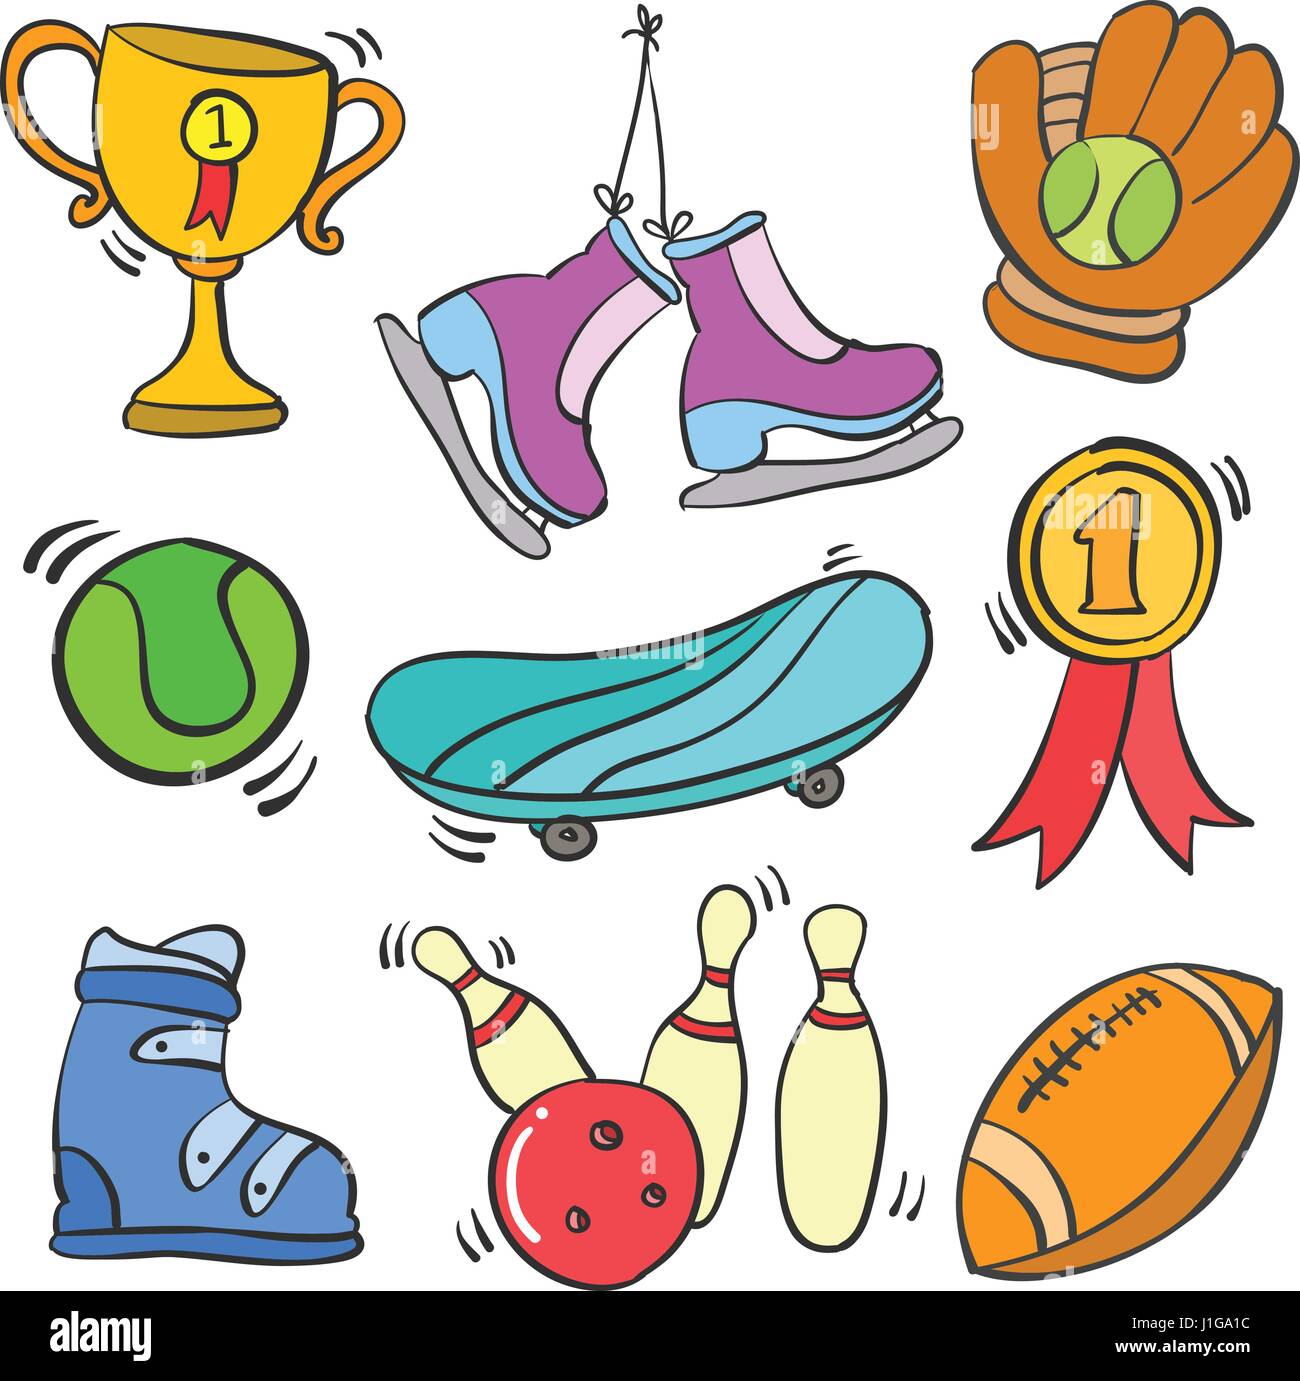 Collection d'objets divers sport vector art Image Vectorielle Stock - Alamy